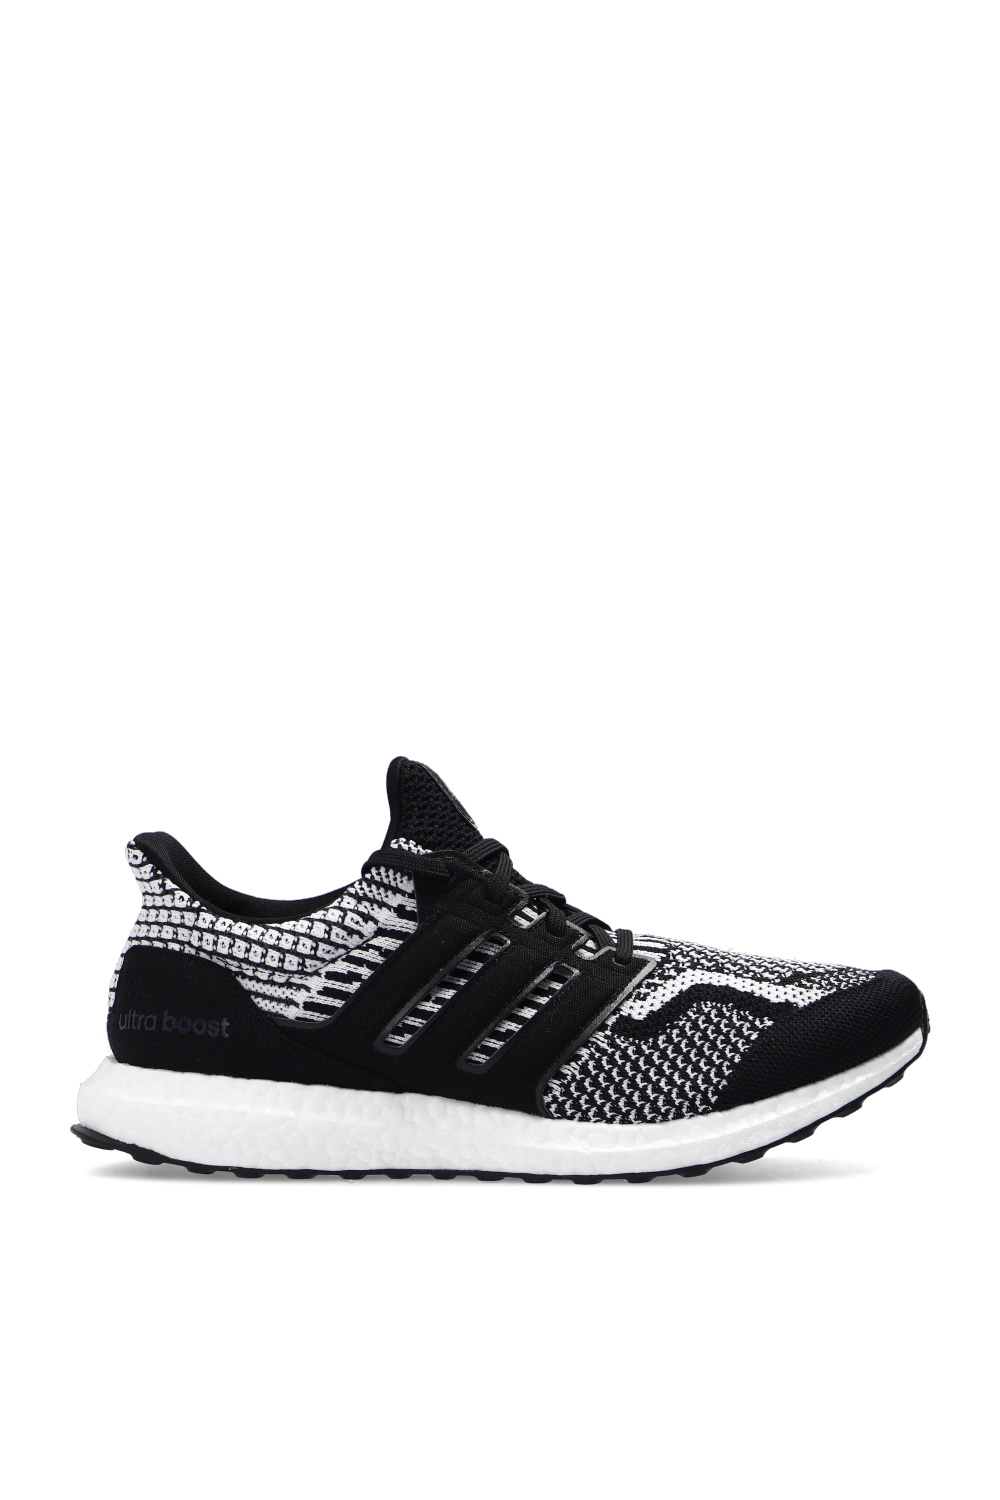  adidas Ultra Boost DNA 5.0 Men's Running Shoe Core Black/Core  Black/Core White FY9348 (8, Numeric_8)